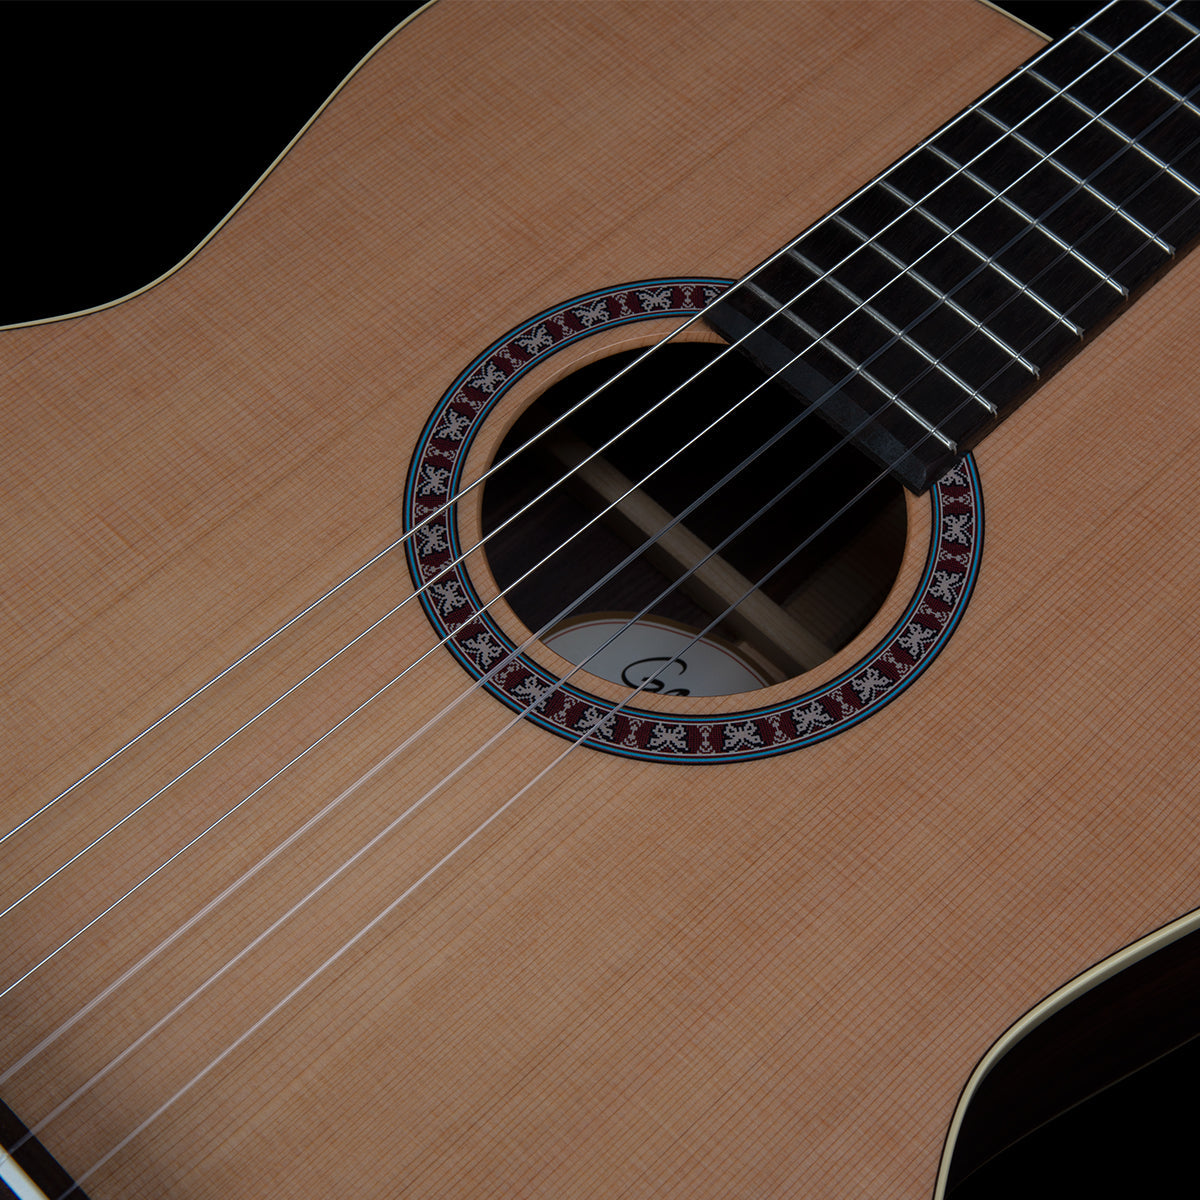 Godin Presentation Clasica II Nylon String Electro Guitar,  for sale at Richards Guitars.